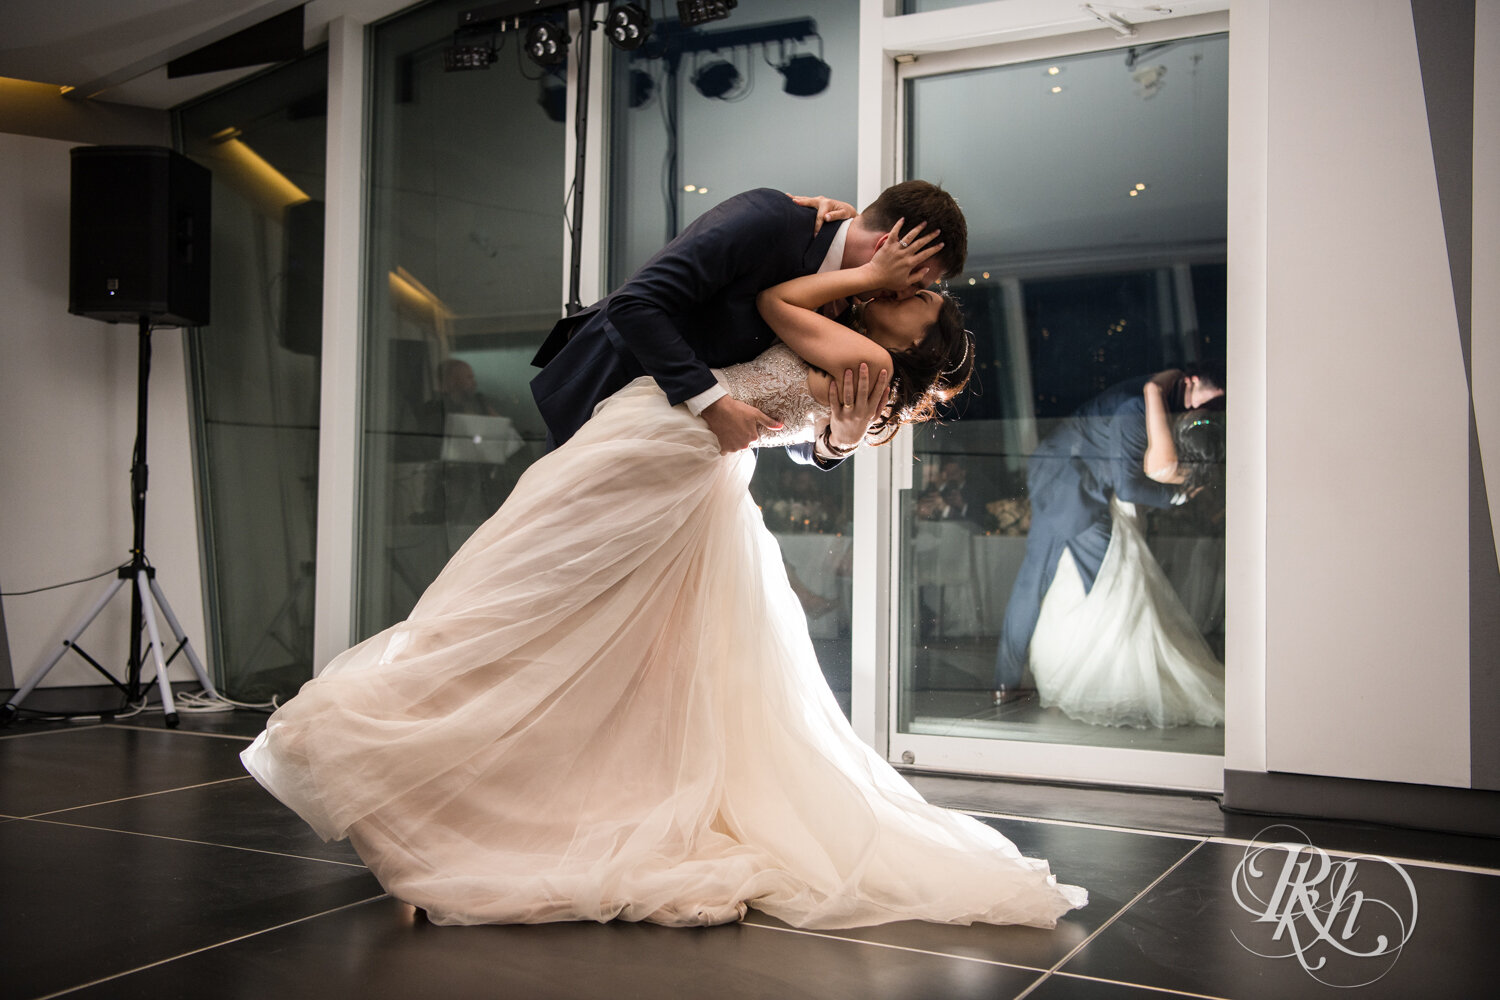 Asian bride and groom dance during wedding reception at Walker Art Center in Minneapolis, Minnesota. 